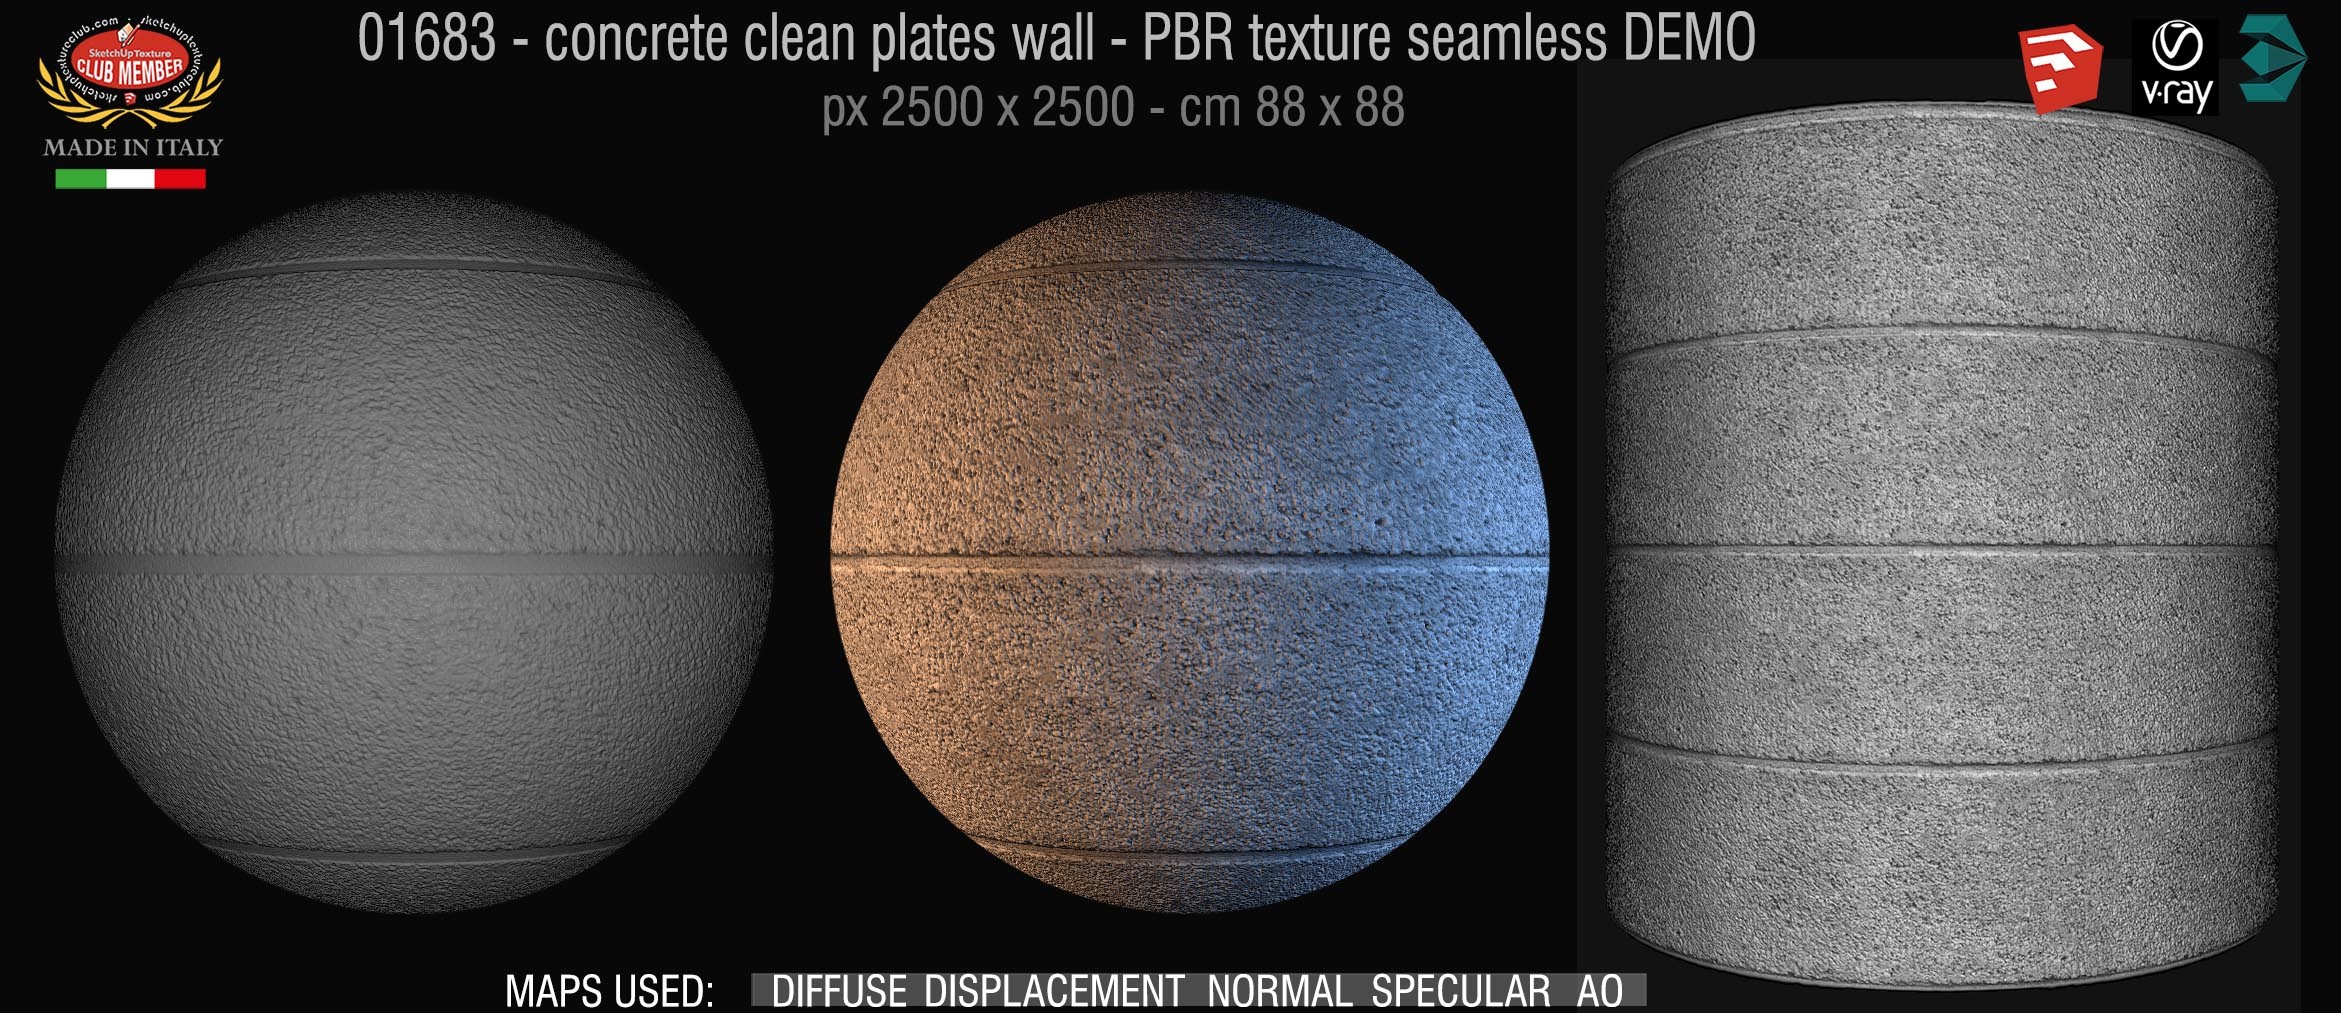 01683 concrete clean plates wall PBR texture seamless DEMO